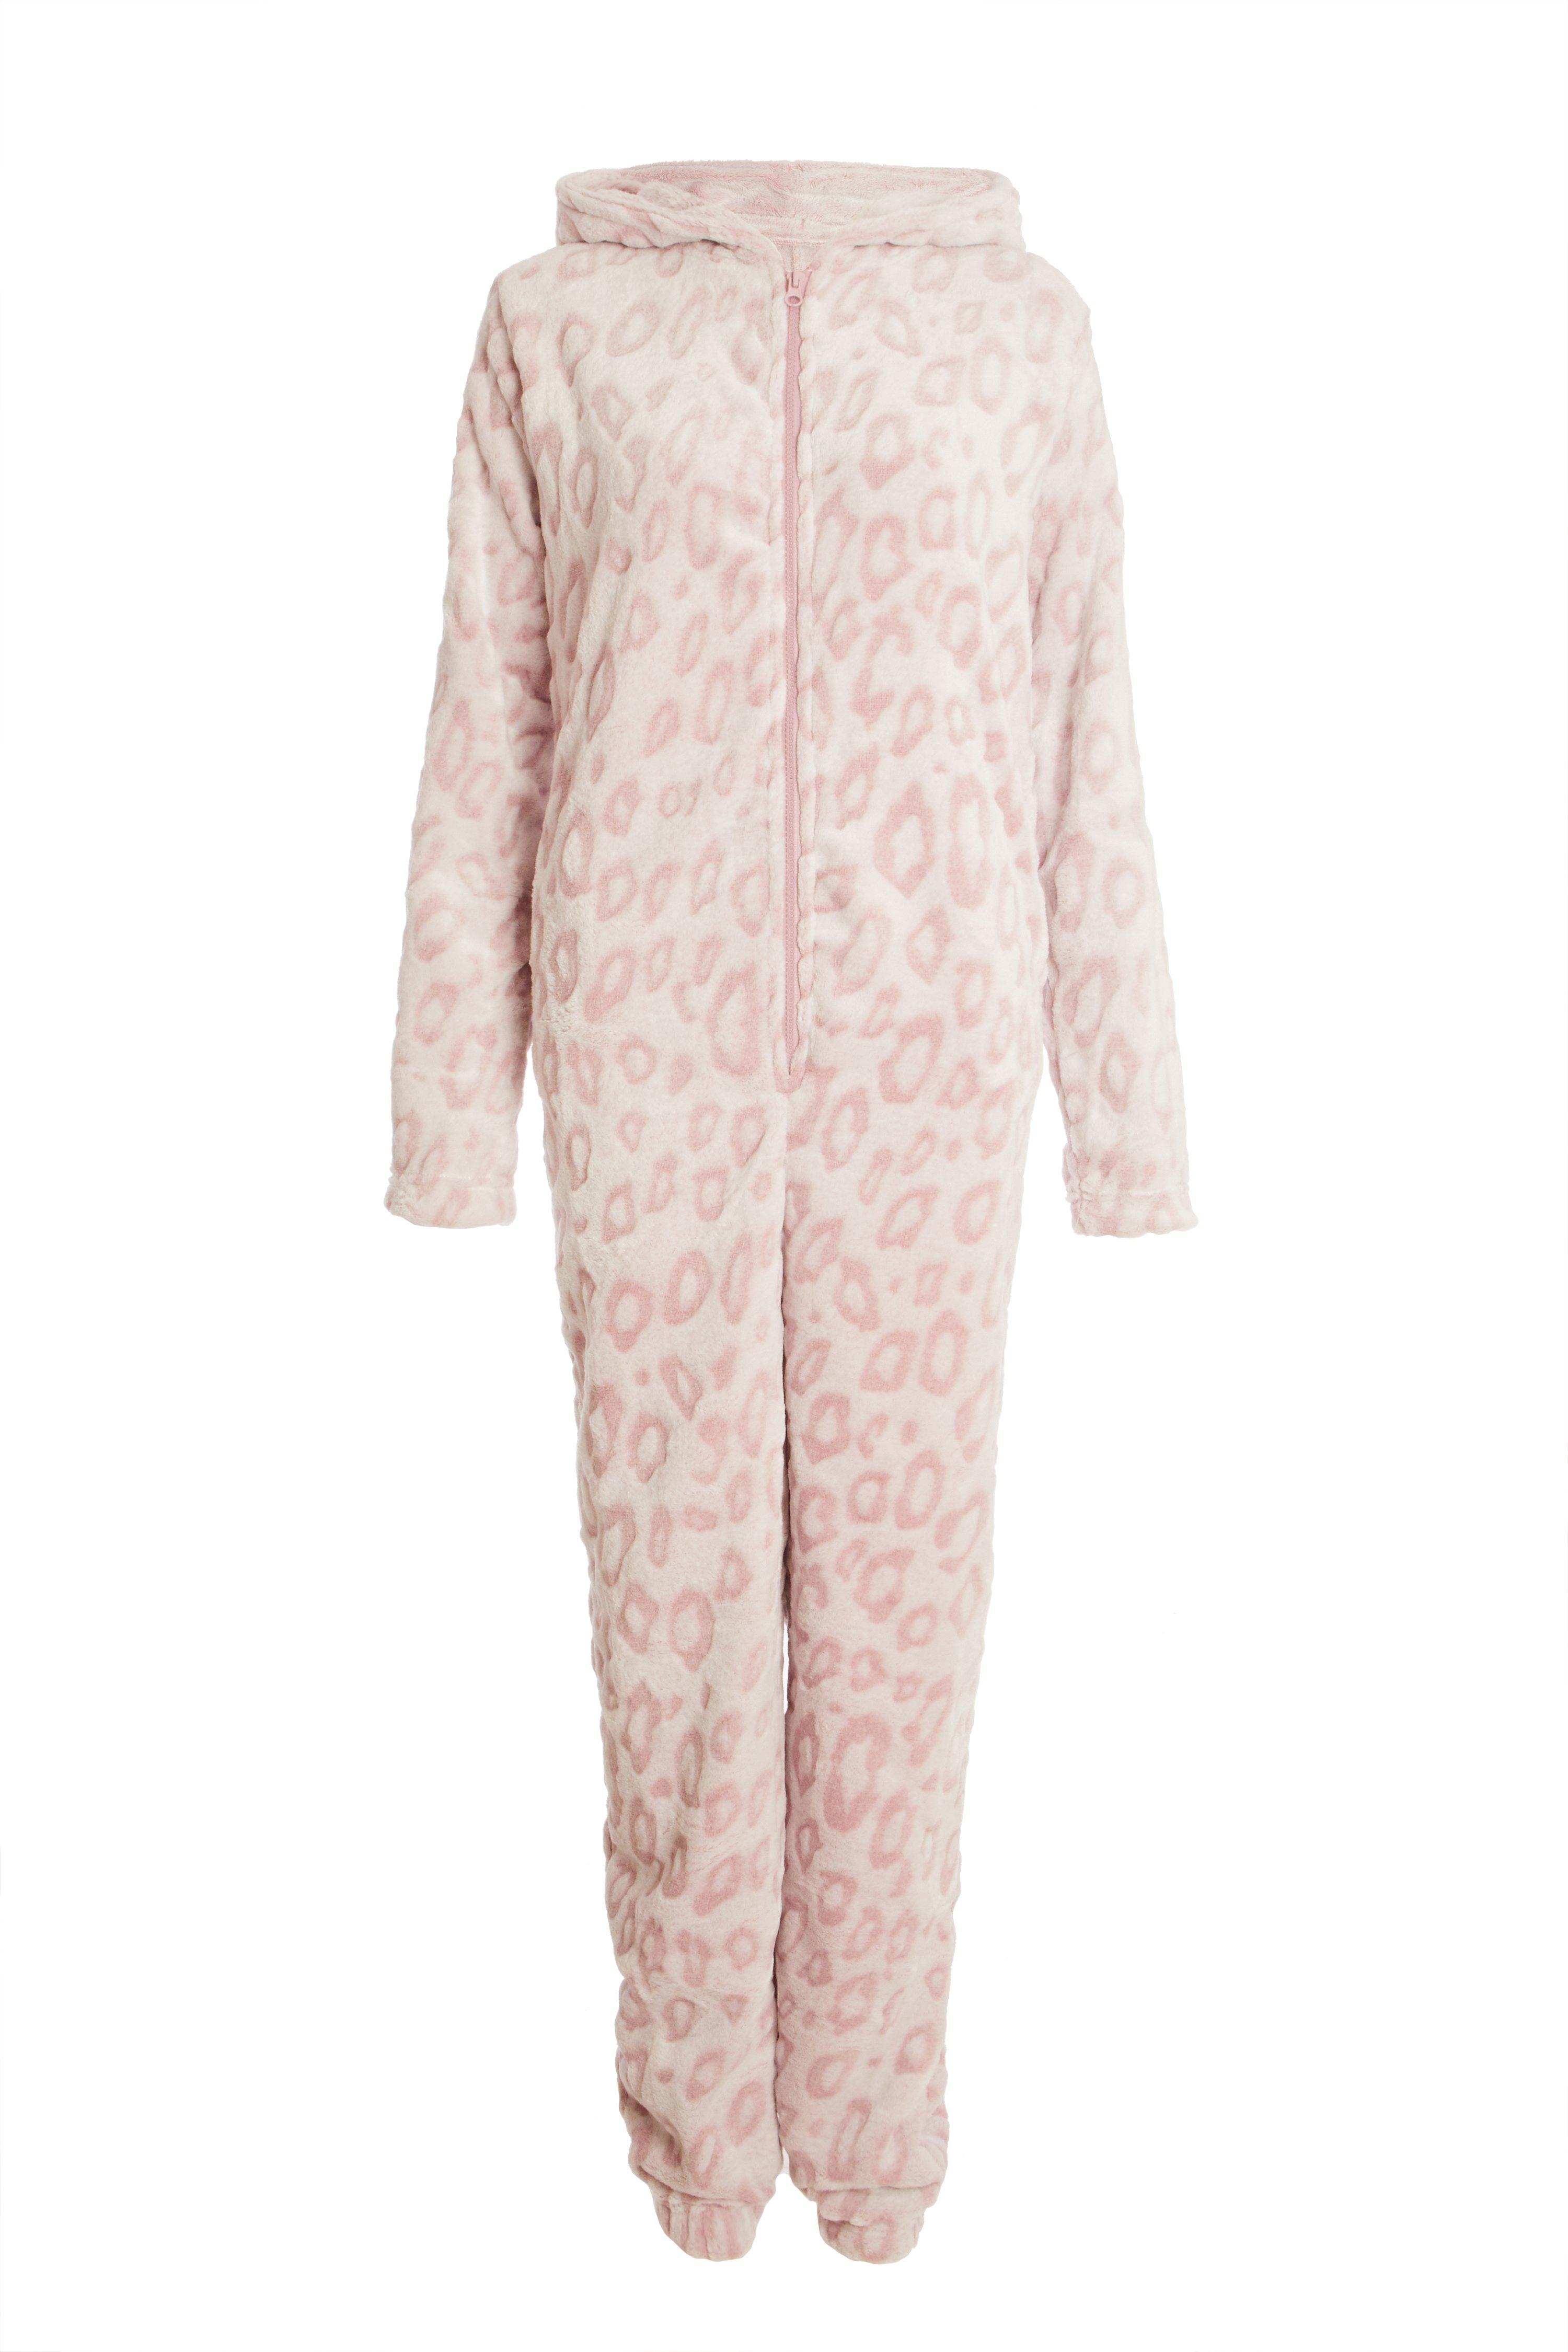 Pink Leopard Print Onesie - Quiz Clothing